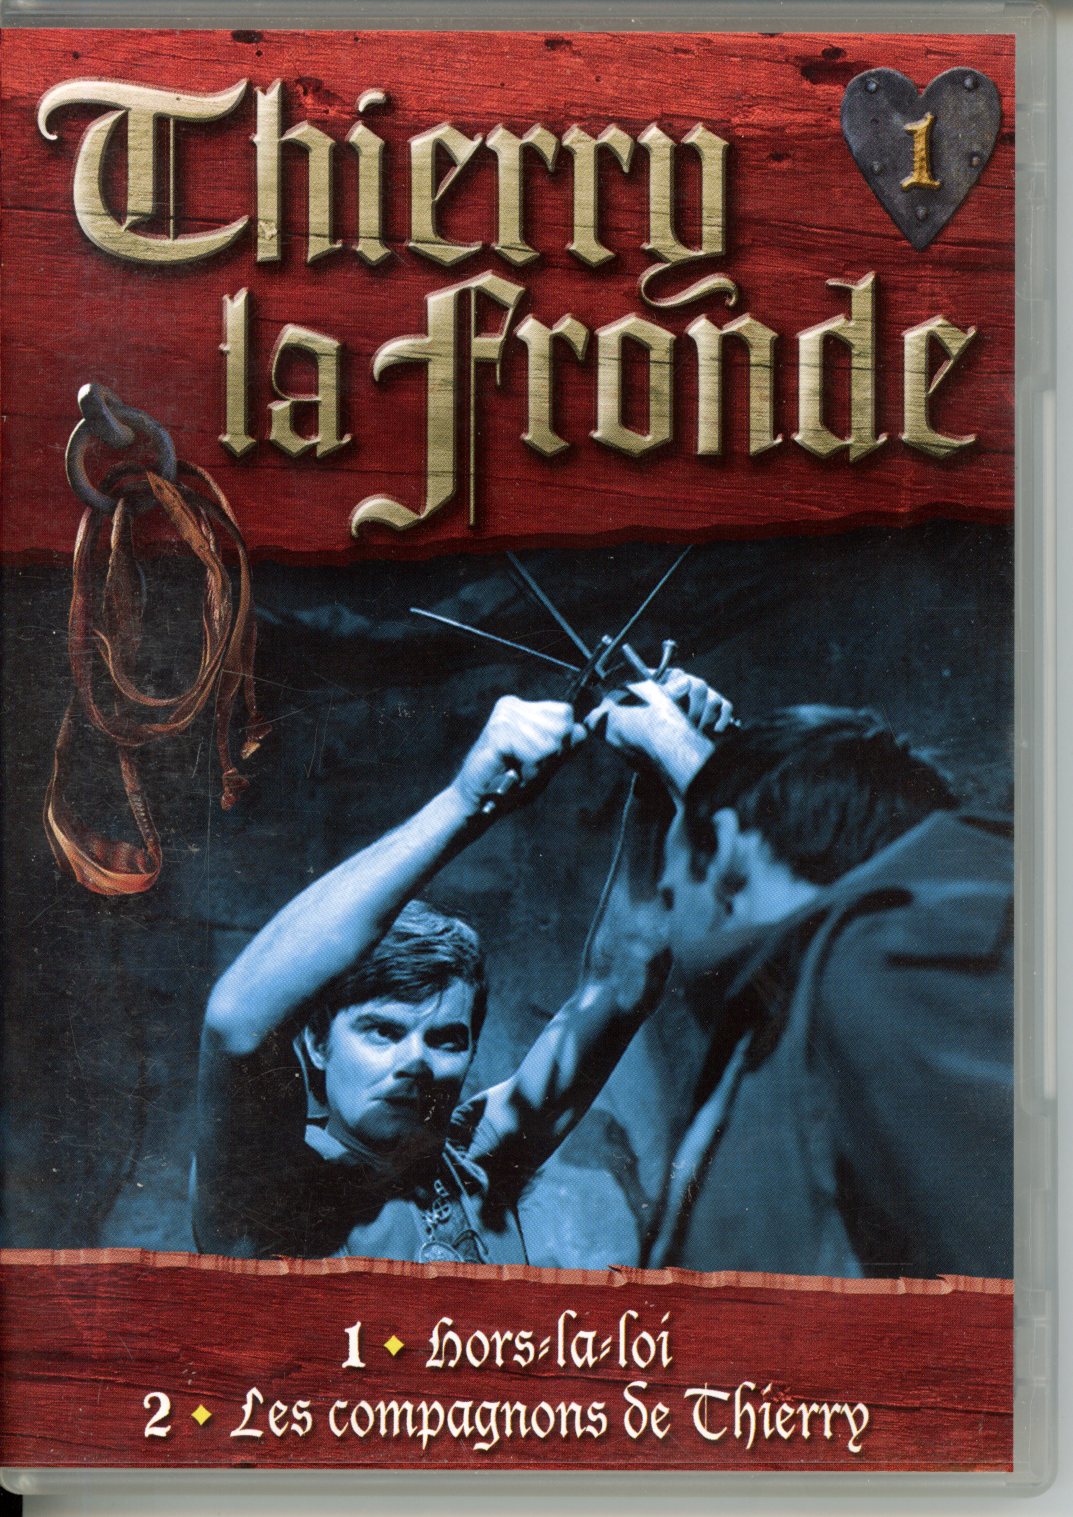 THIERRY LA FRONDE DVD 1 SERIE TV